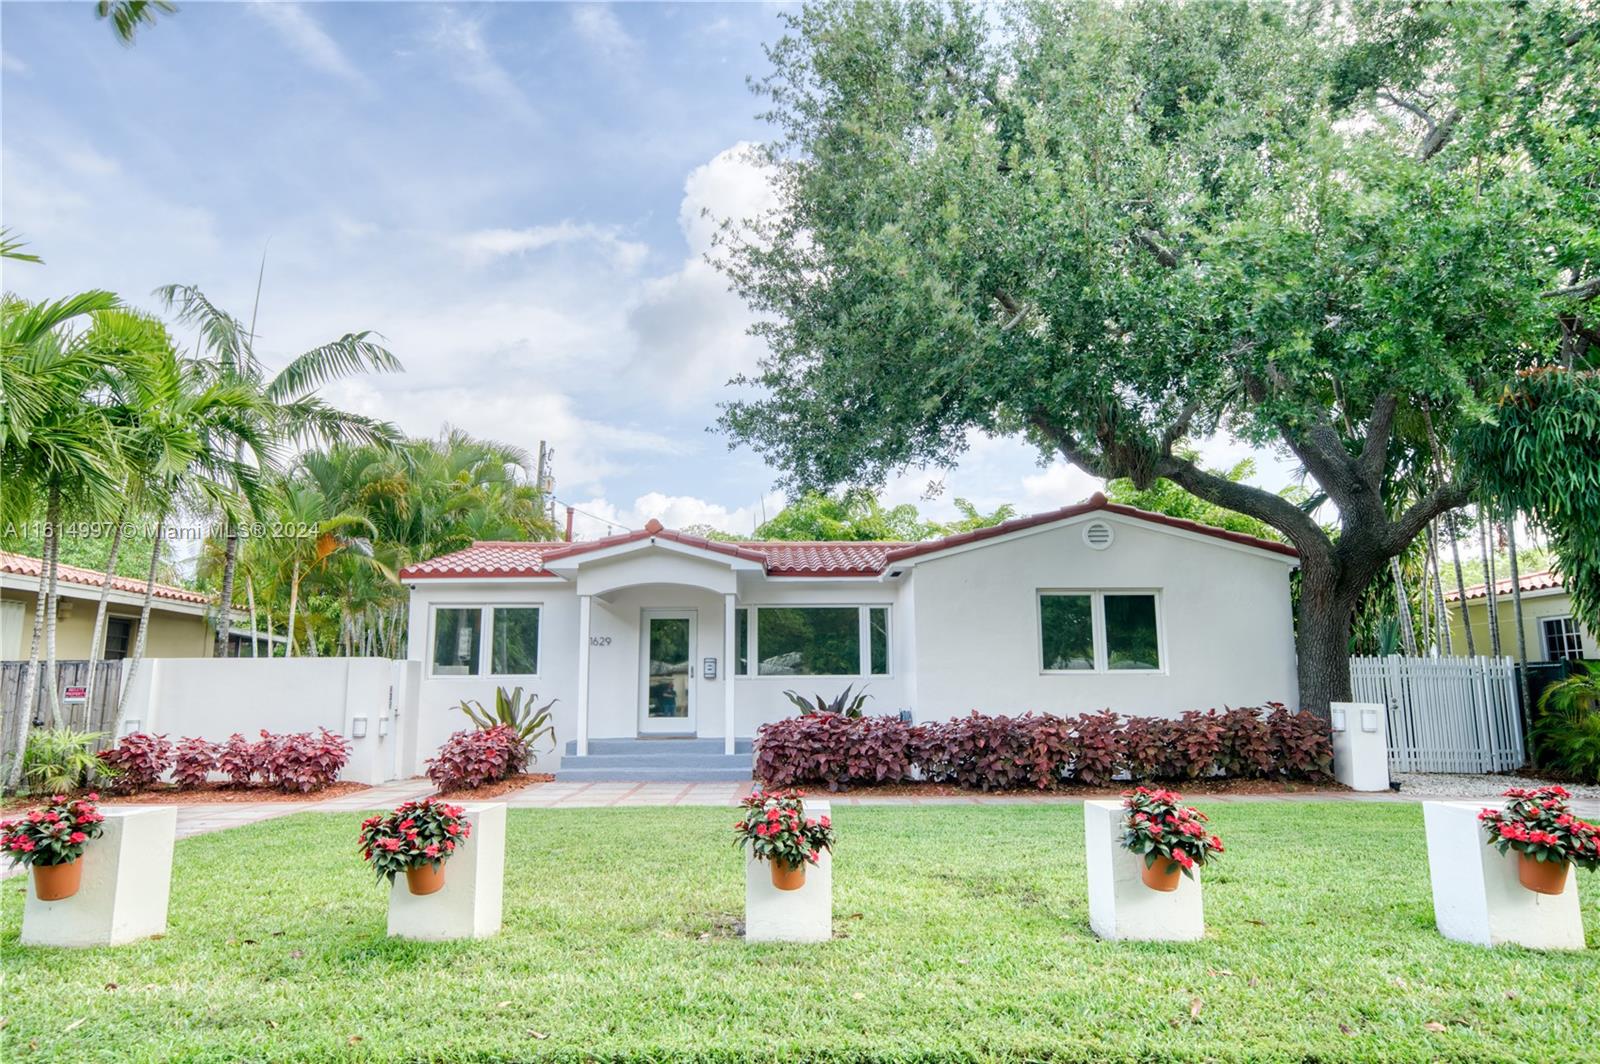 Property for Sale at 1629 Westward Dr, Miami Springs, Miami-Dade County, Florida - Bedrooms: 3 
Bathrooms: 2  - $859,000